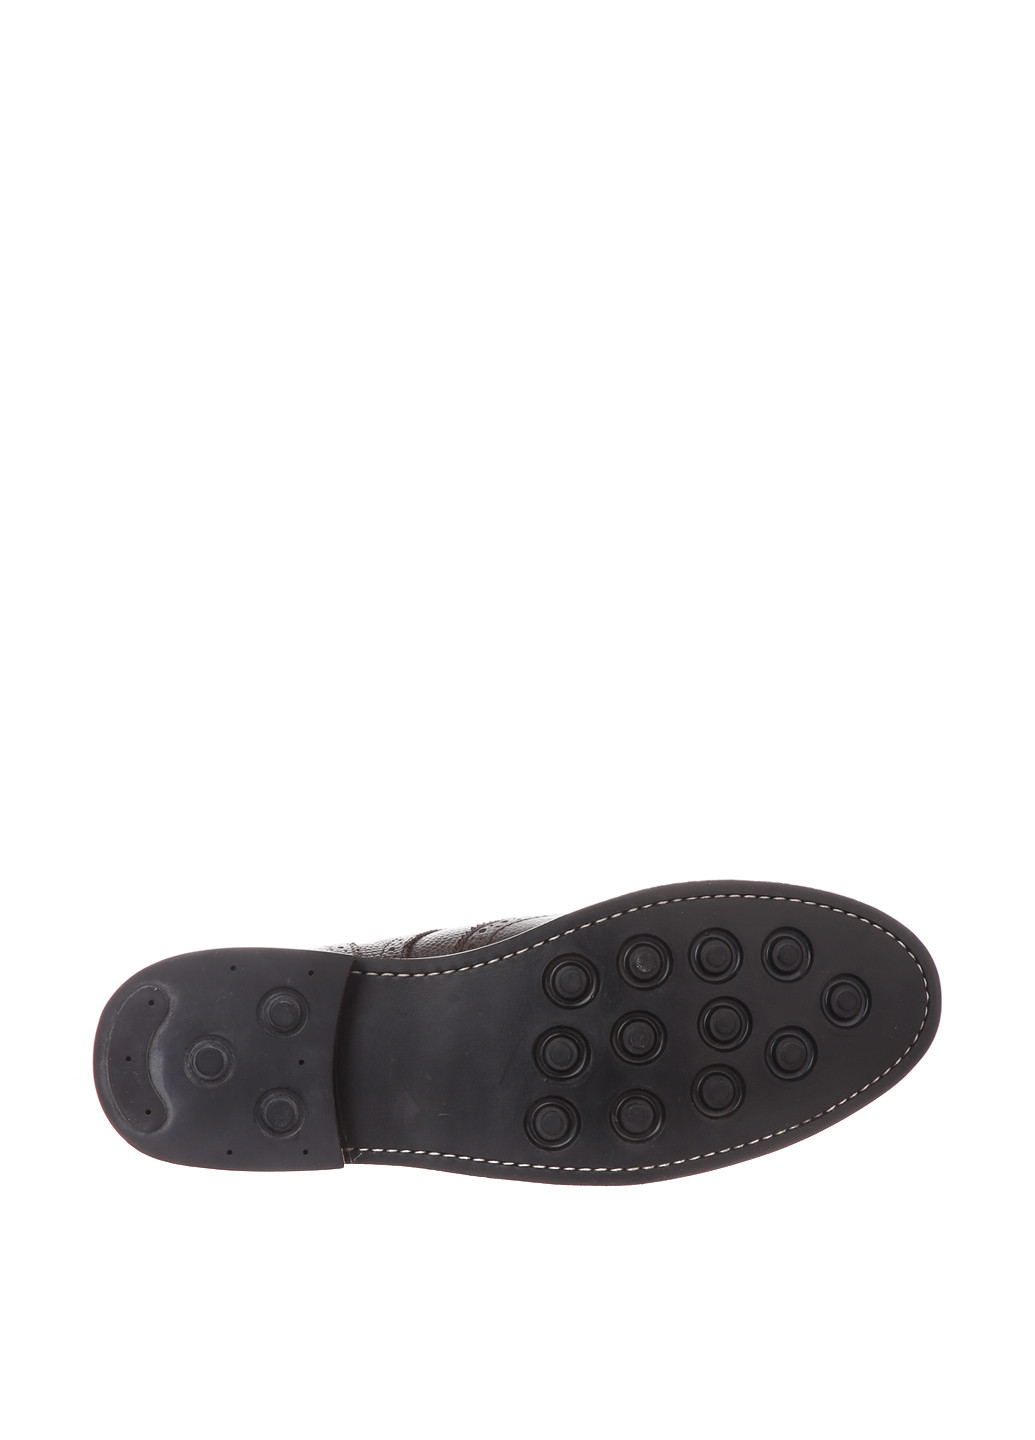 Темно-коричневые осенние ботинки броги Kiomi